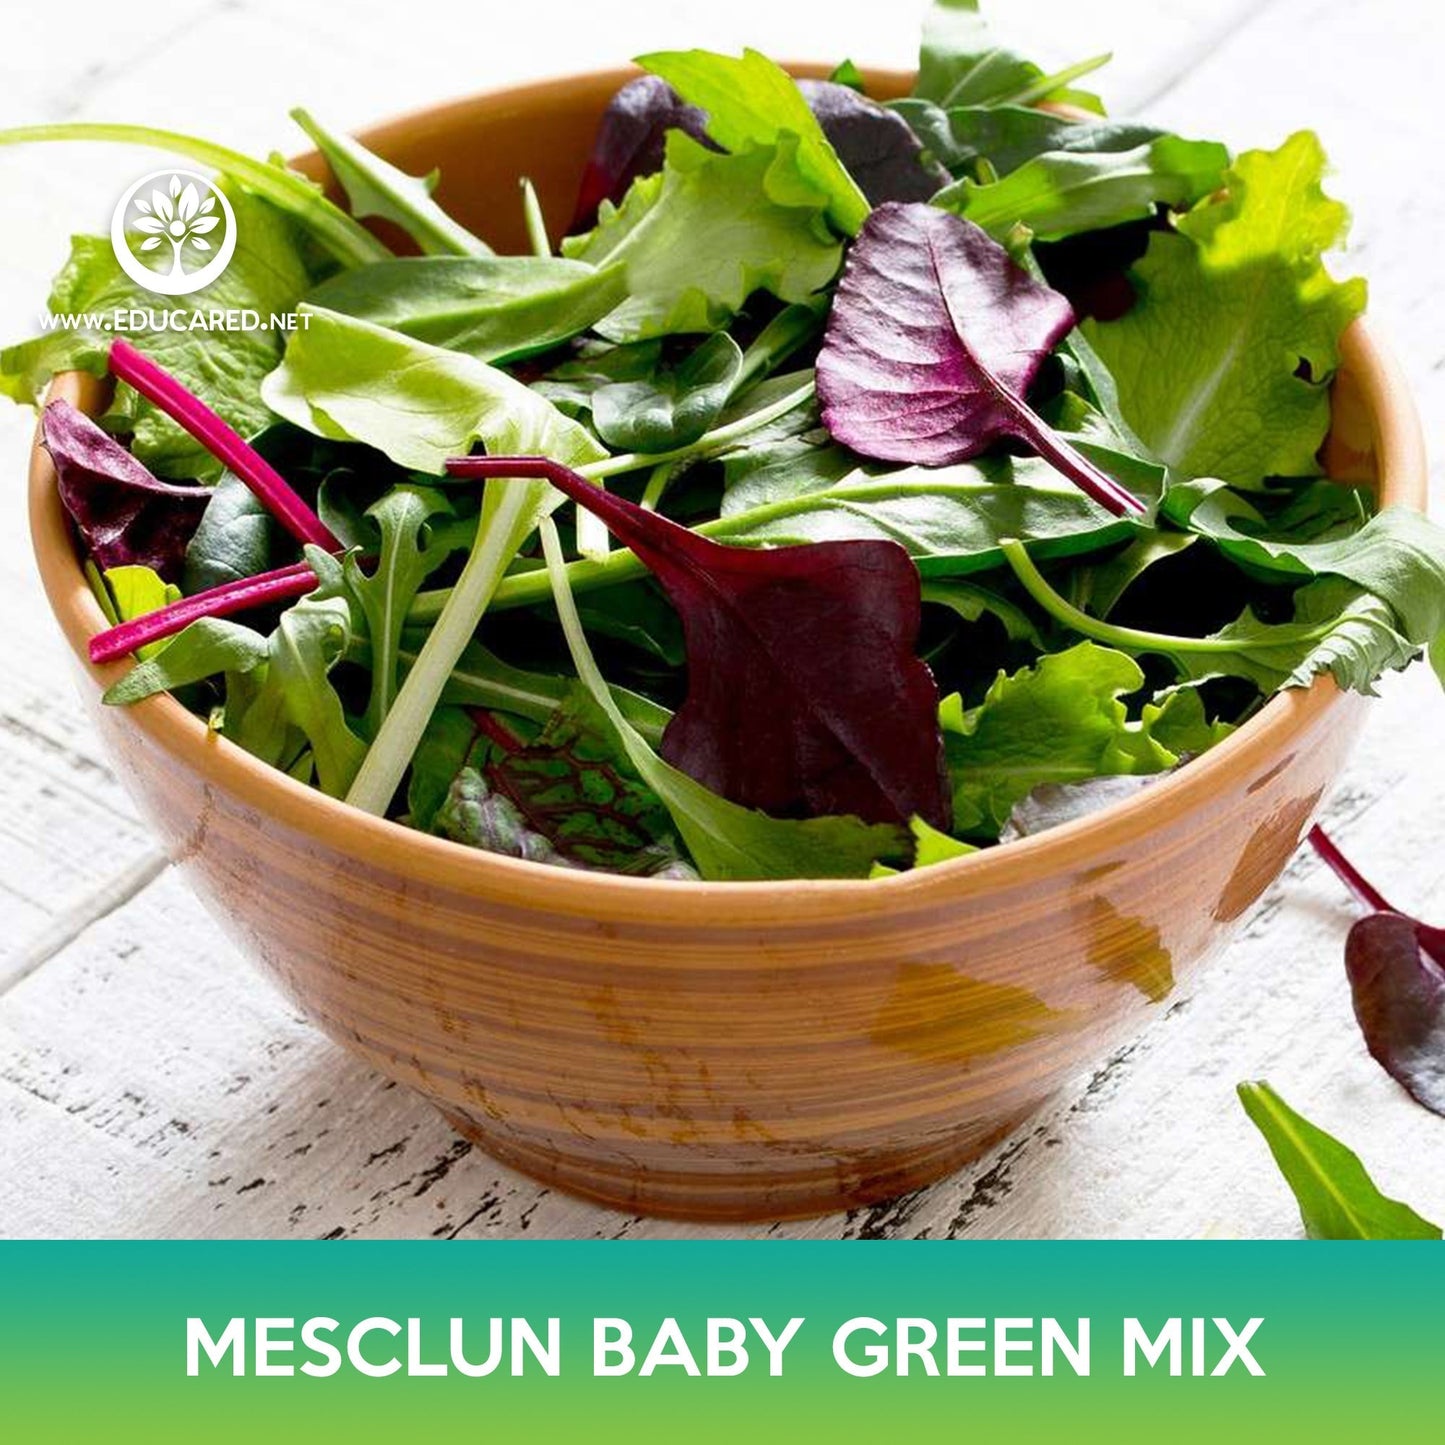 Mesclun Baby Green Mix Seeds